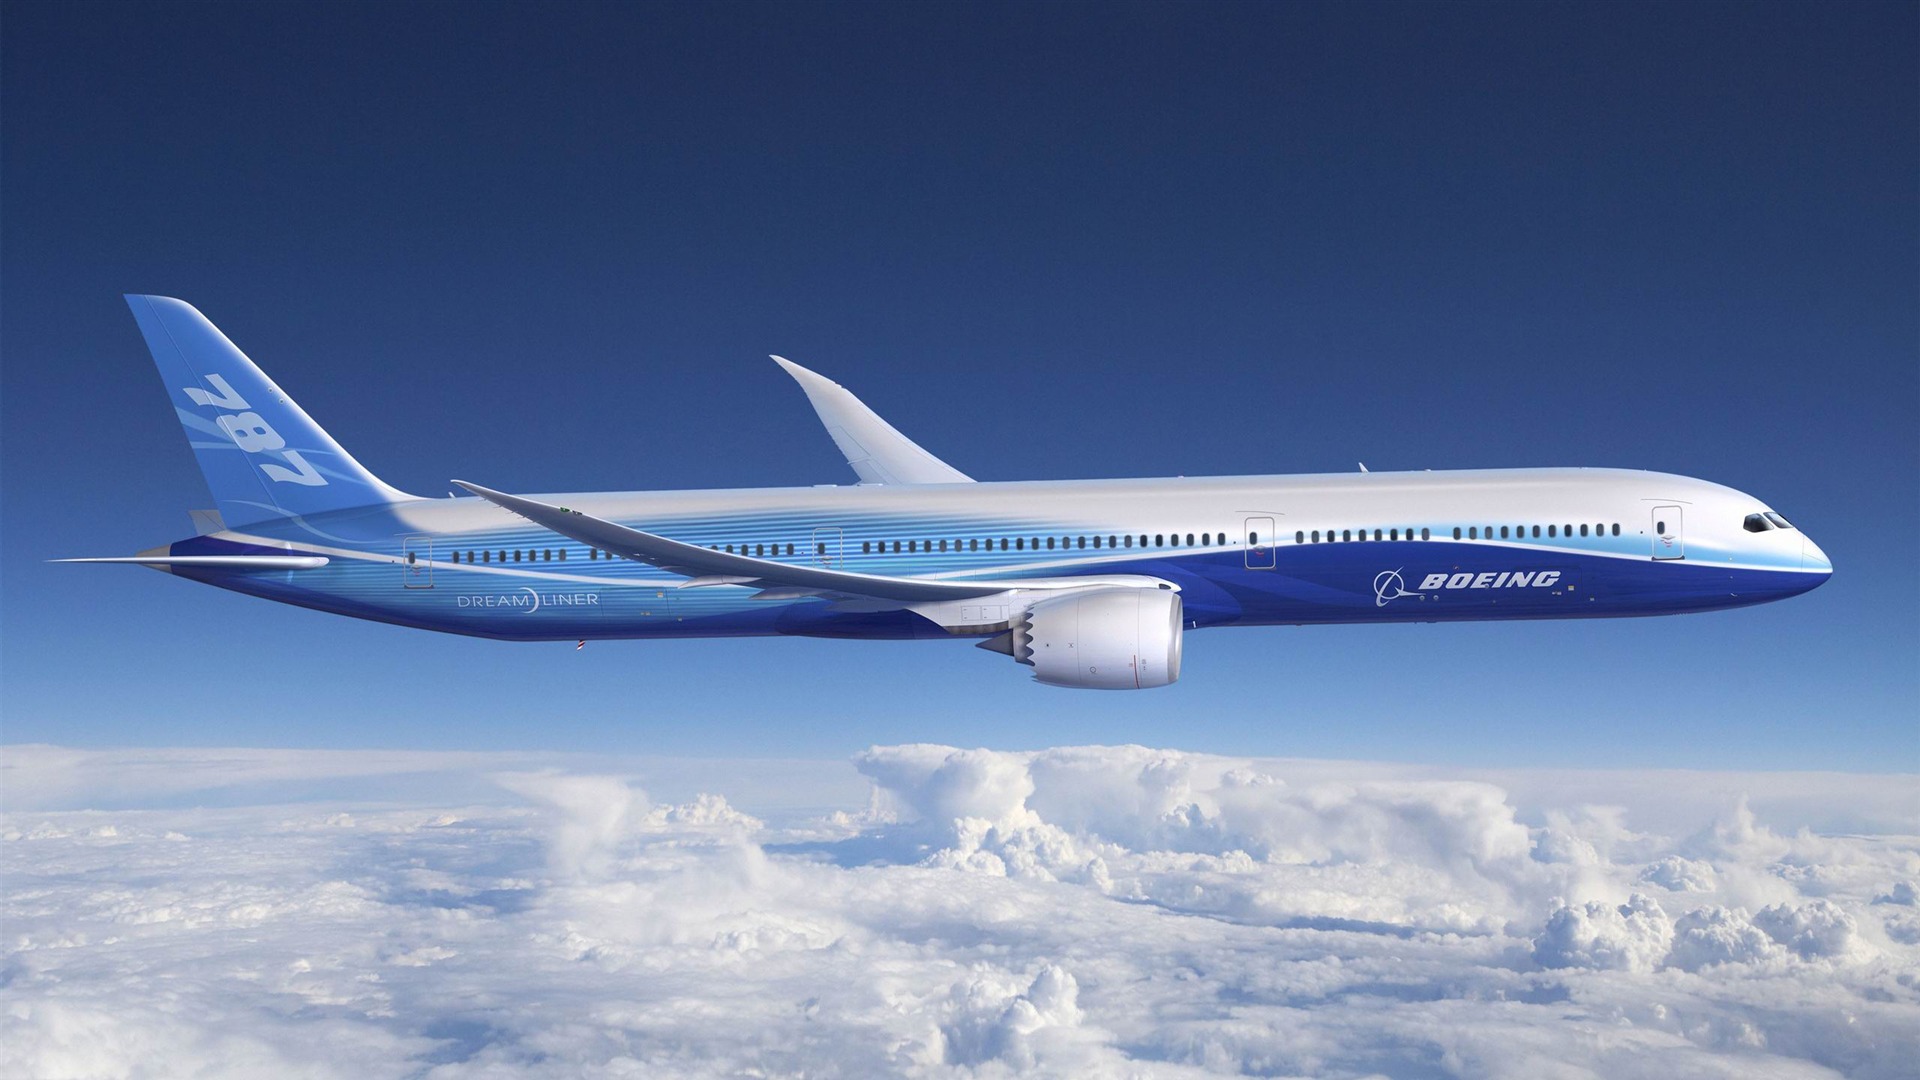 Boeing Dreamliner Airplane Wallpaper